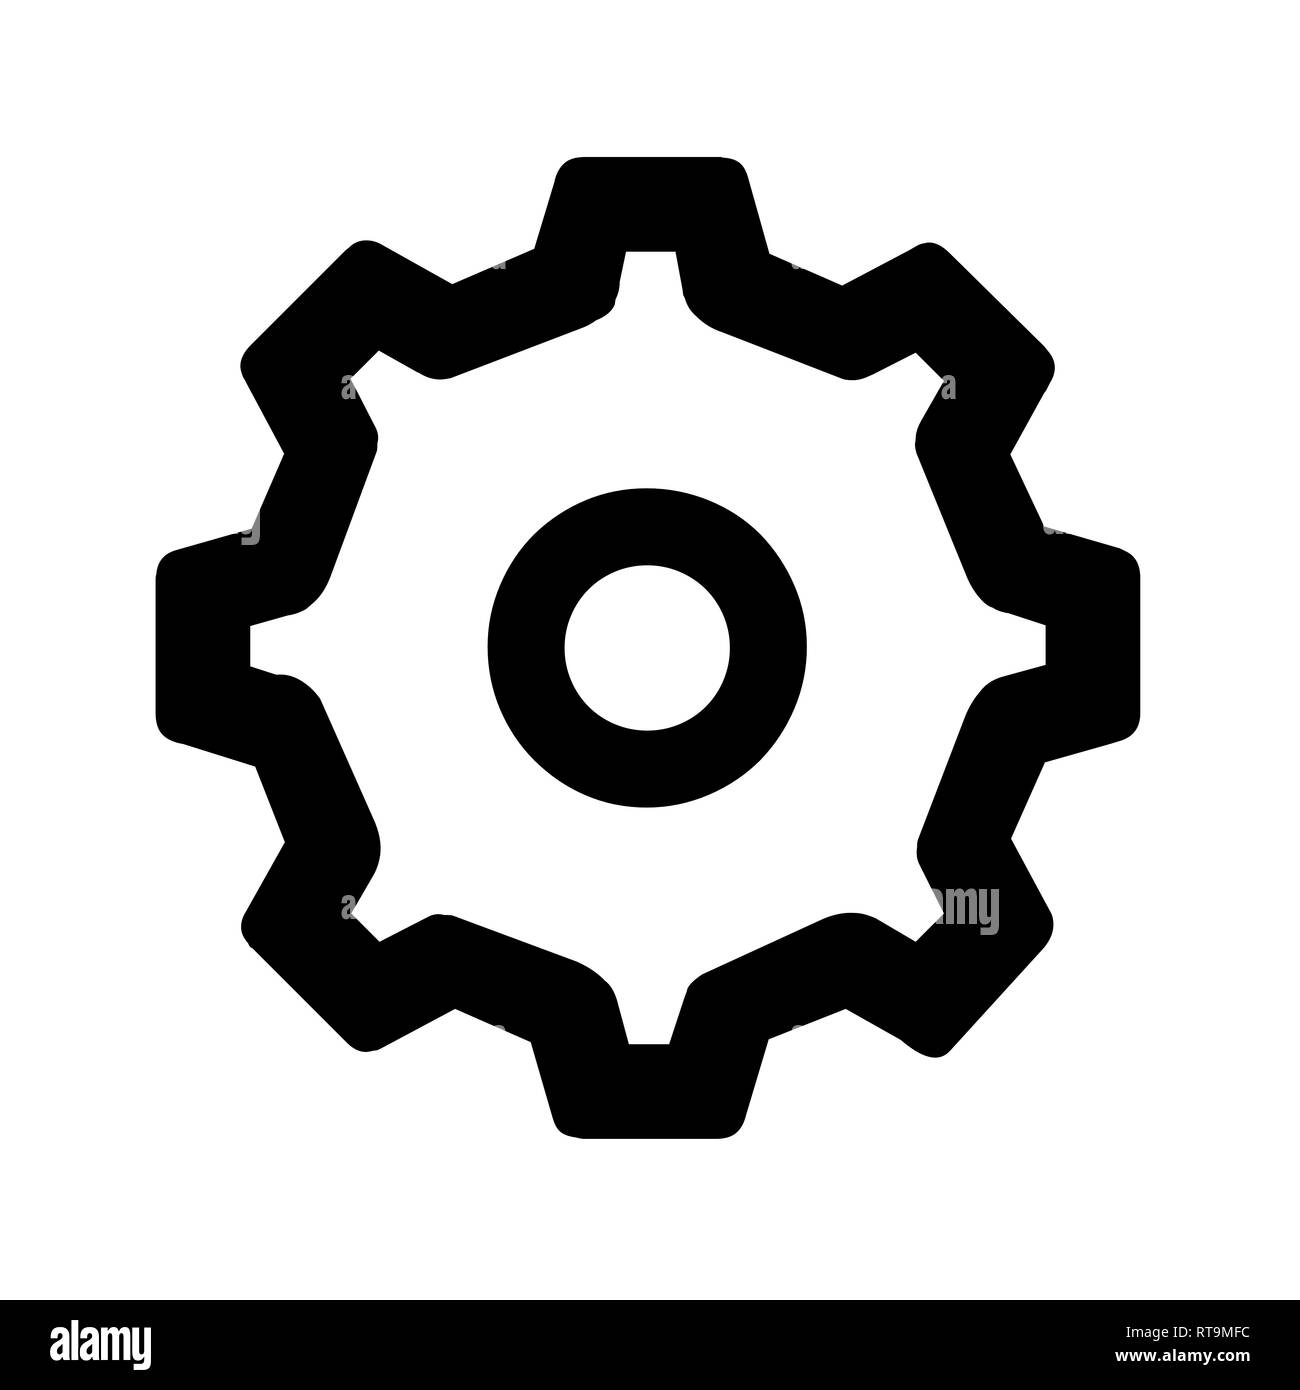 Gear symbol icon illustration Stock Photo